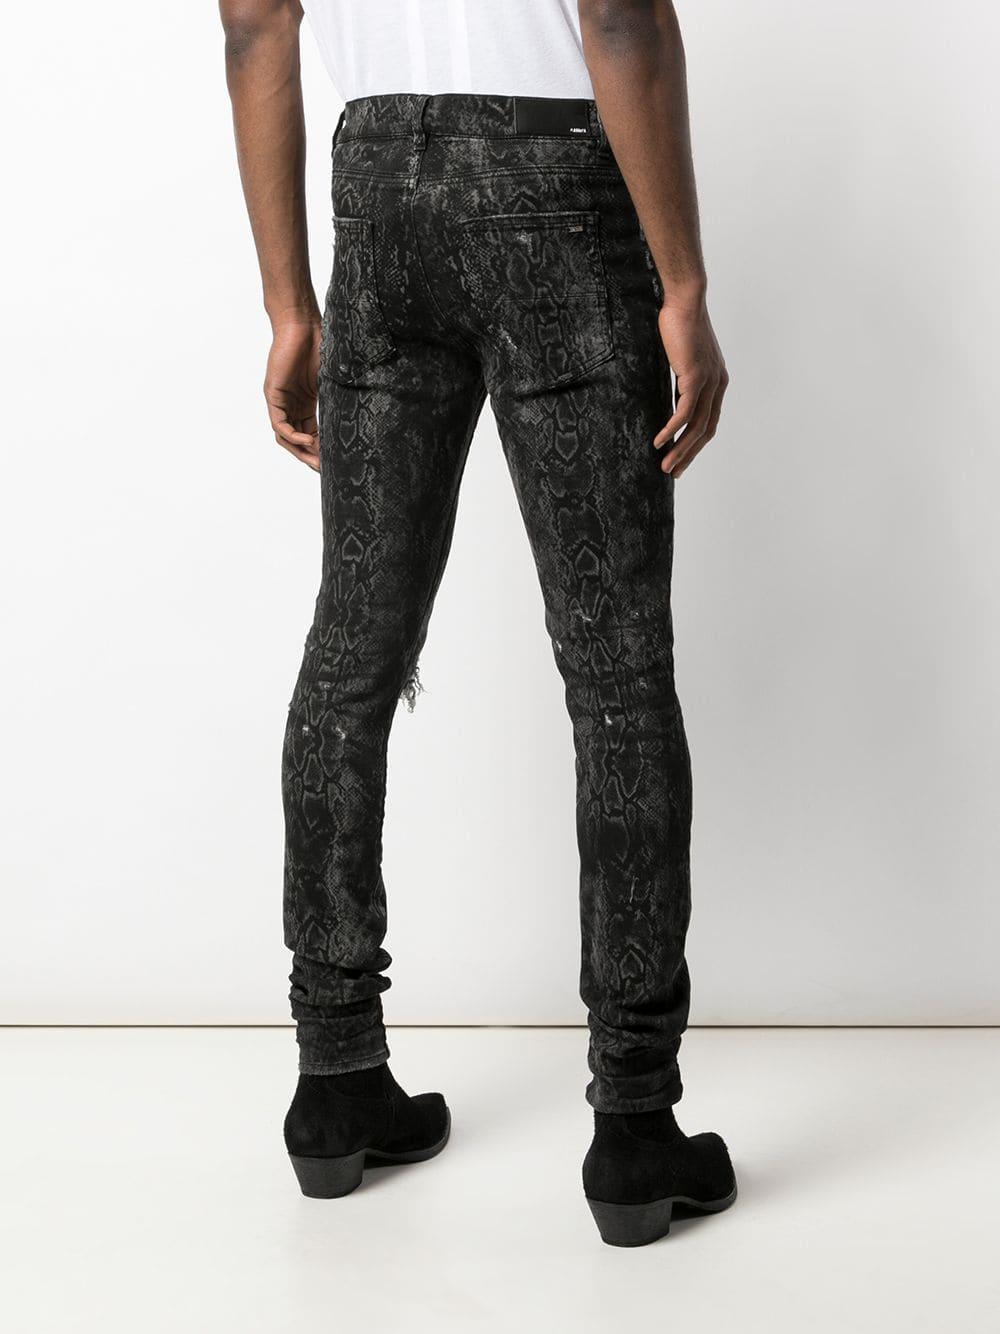 Amiri Python Print Skinny Jeans in Black for Men - Lyst